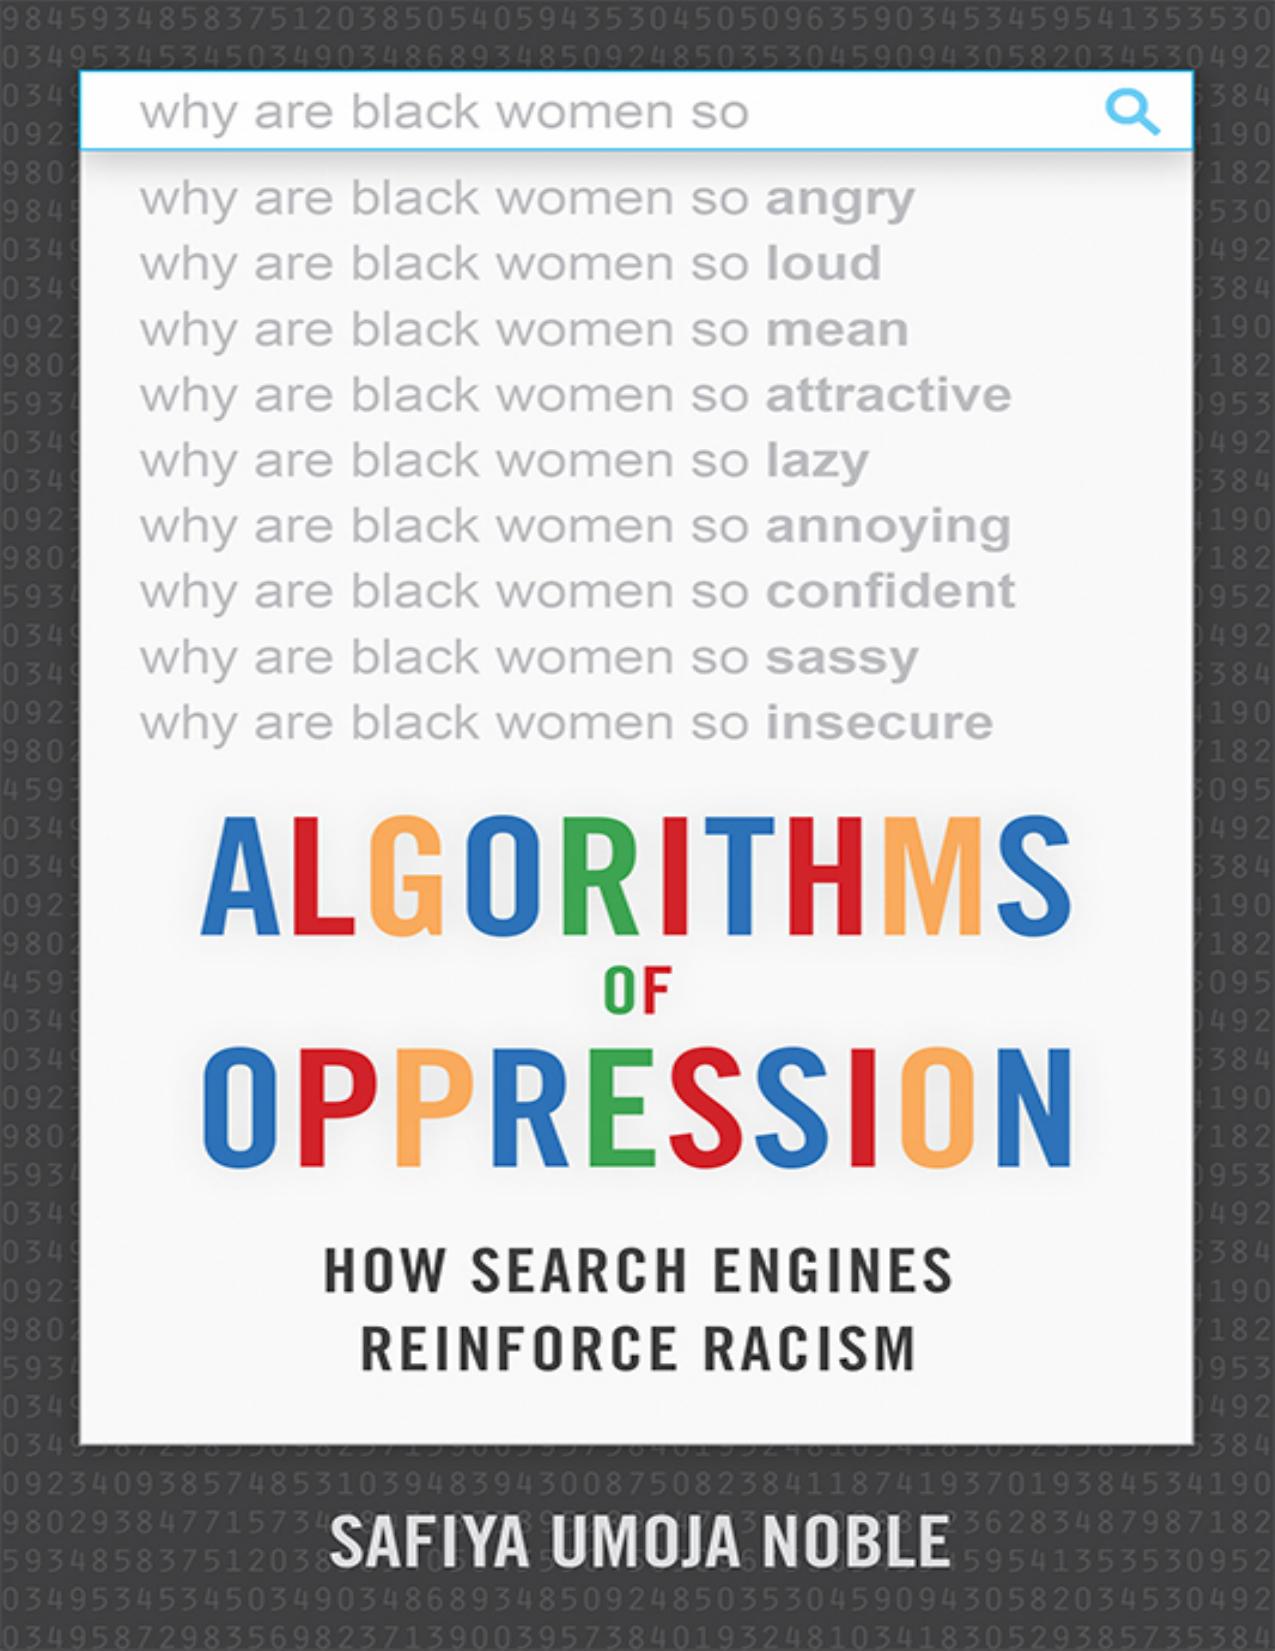 Algorithms of Oppression How Search Engines Reinforce Racism - Safiya Umoja Noble.jpg